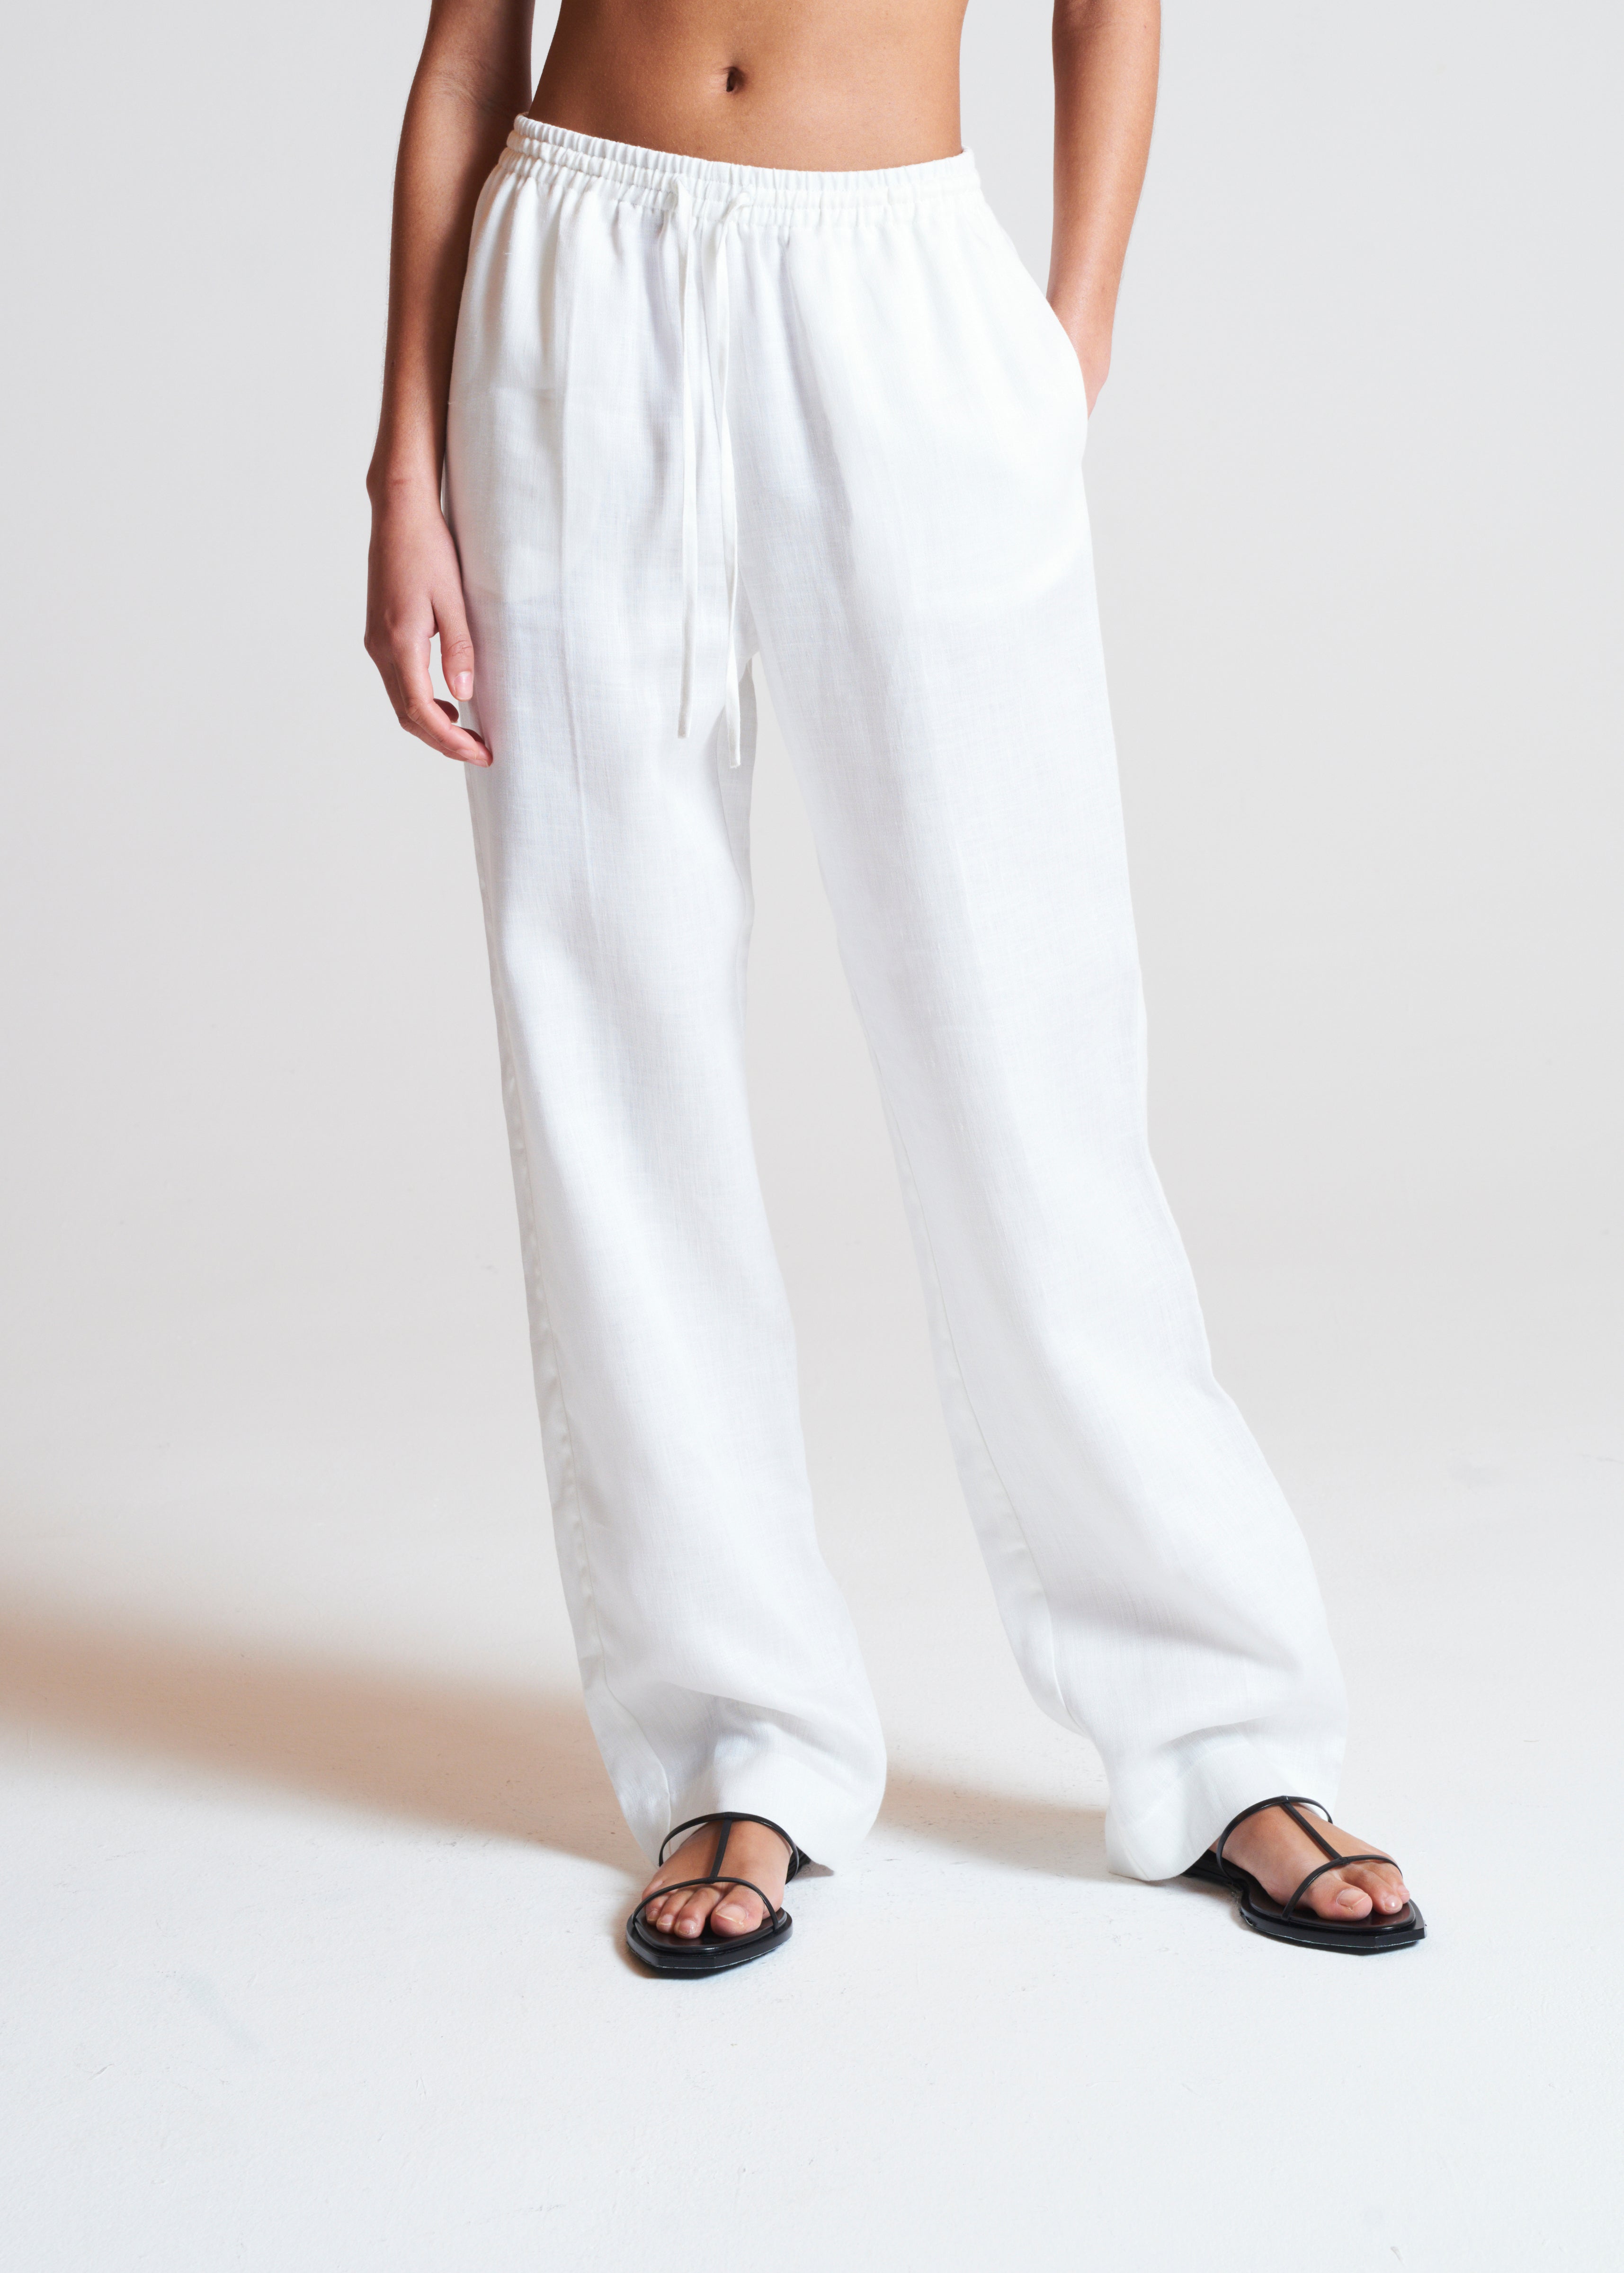 Buy White Pants for Women by AURELIA Online | Ajio.com